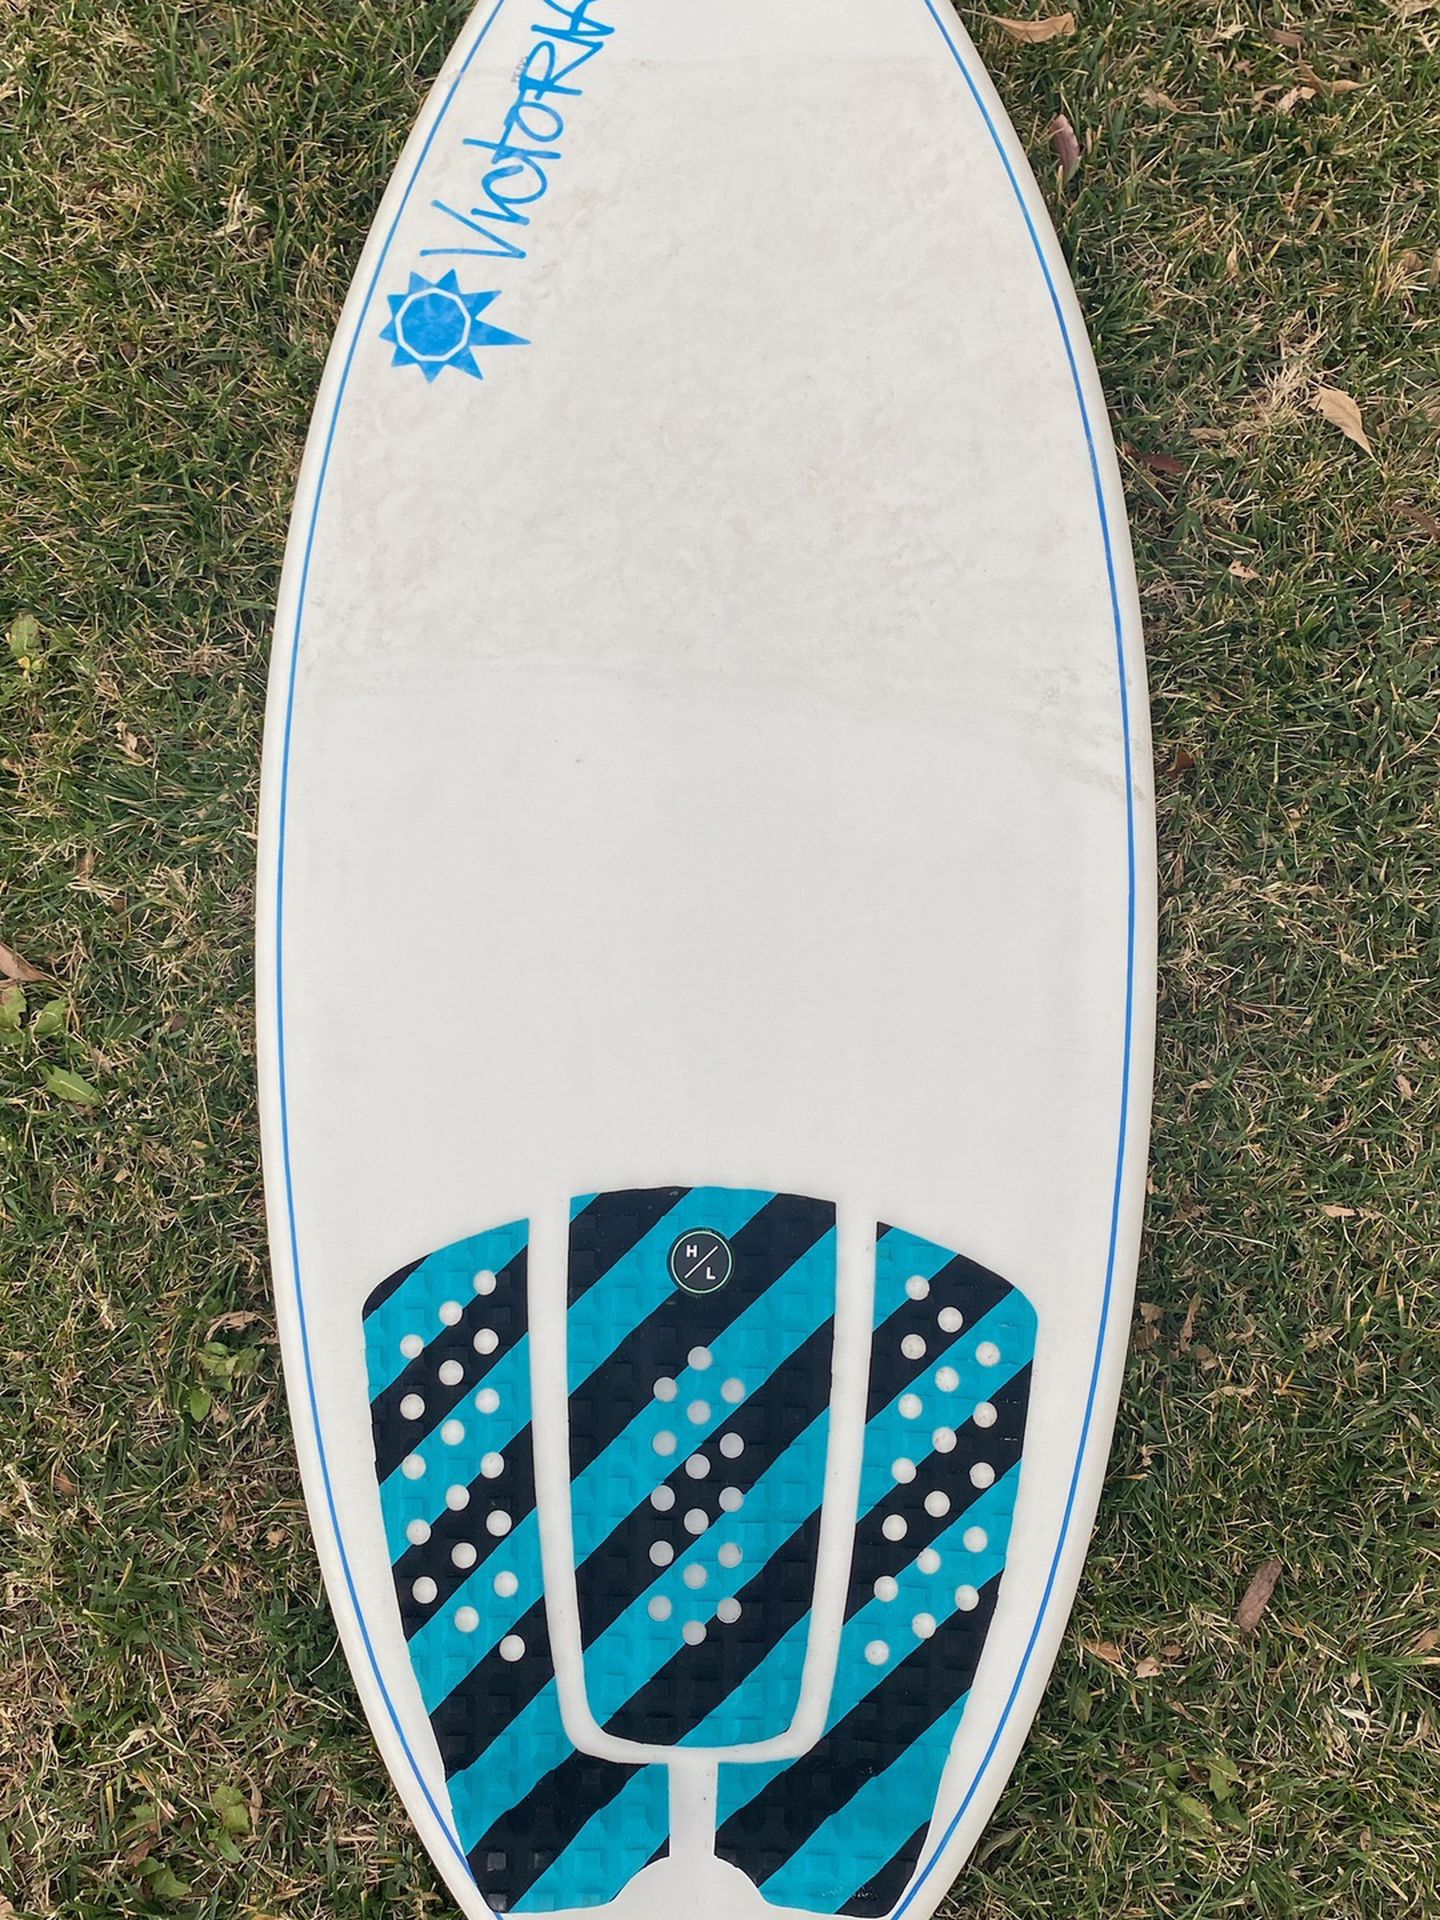 Victoria 51 inch fiberglass skim board